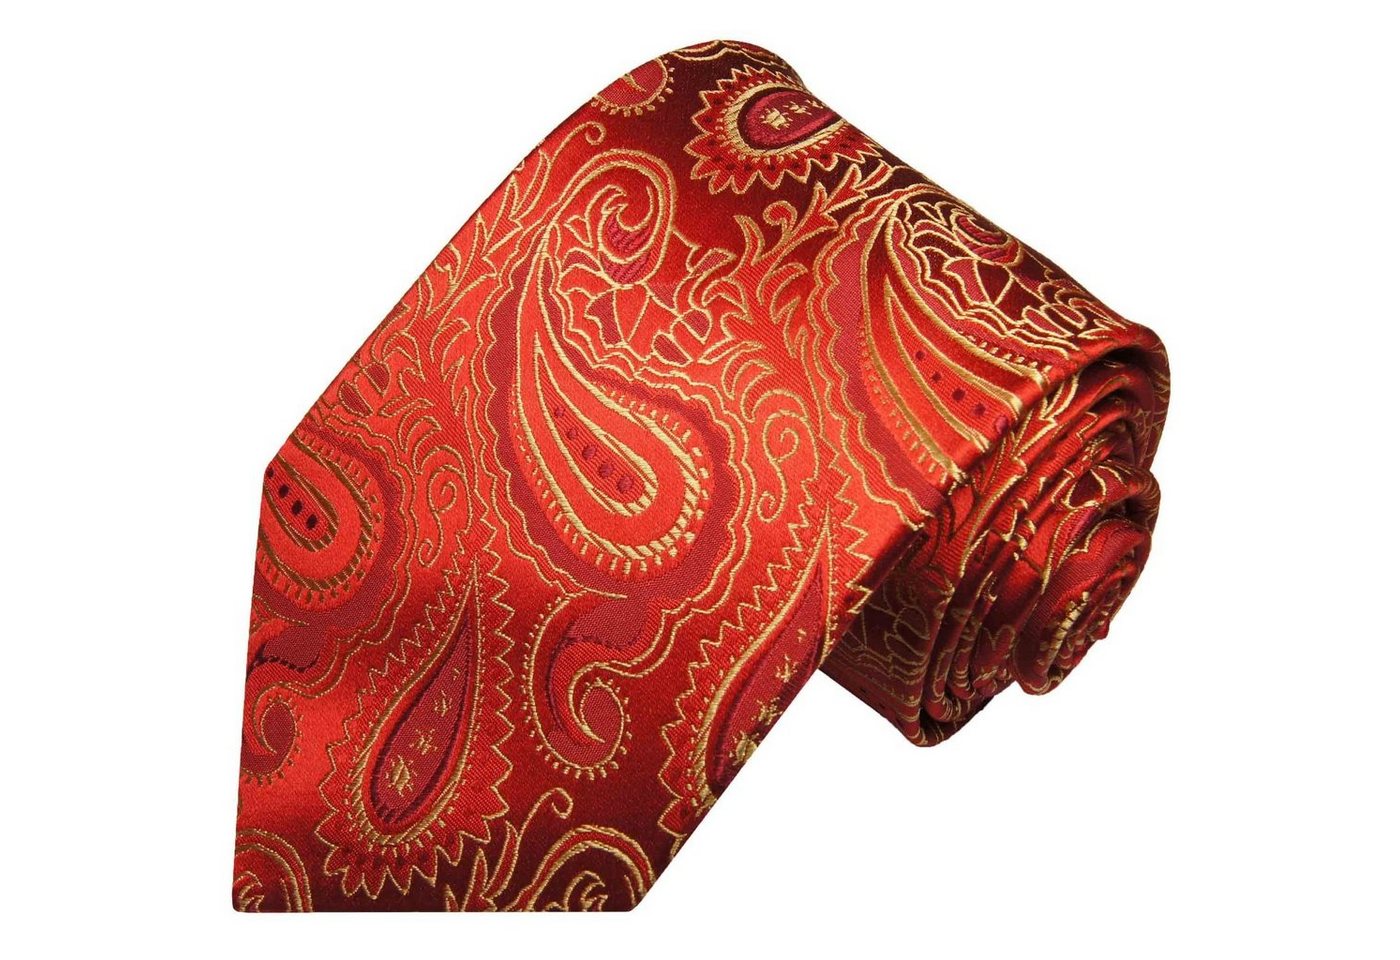 Paul Malone Krawatte Elegante Seidenkrawatte Herren Schlips paisley brokat 100% Seide Schmal (6cm), rot 680 von Paul Malone